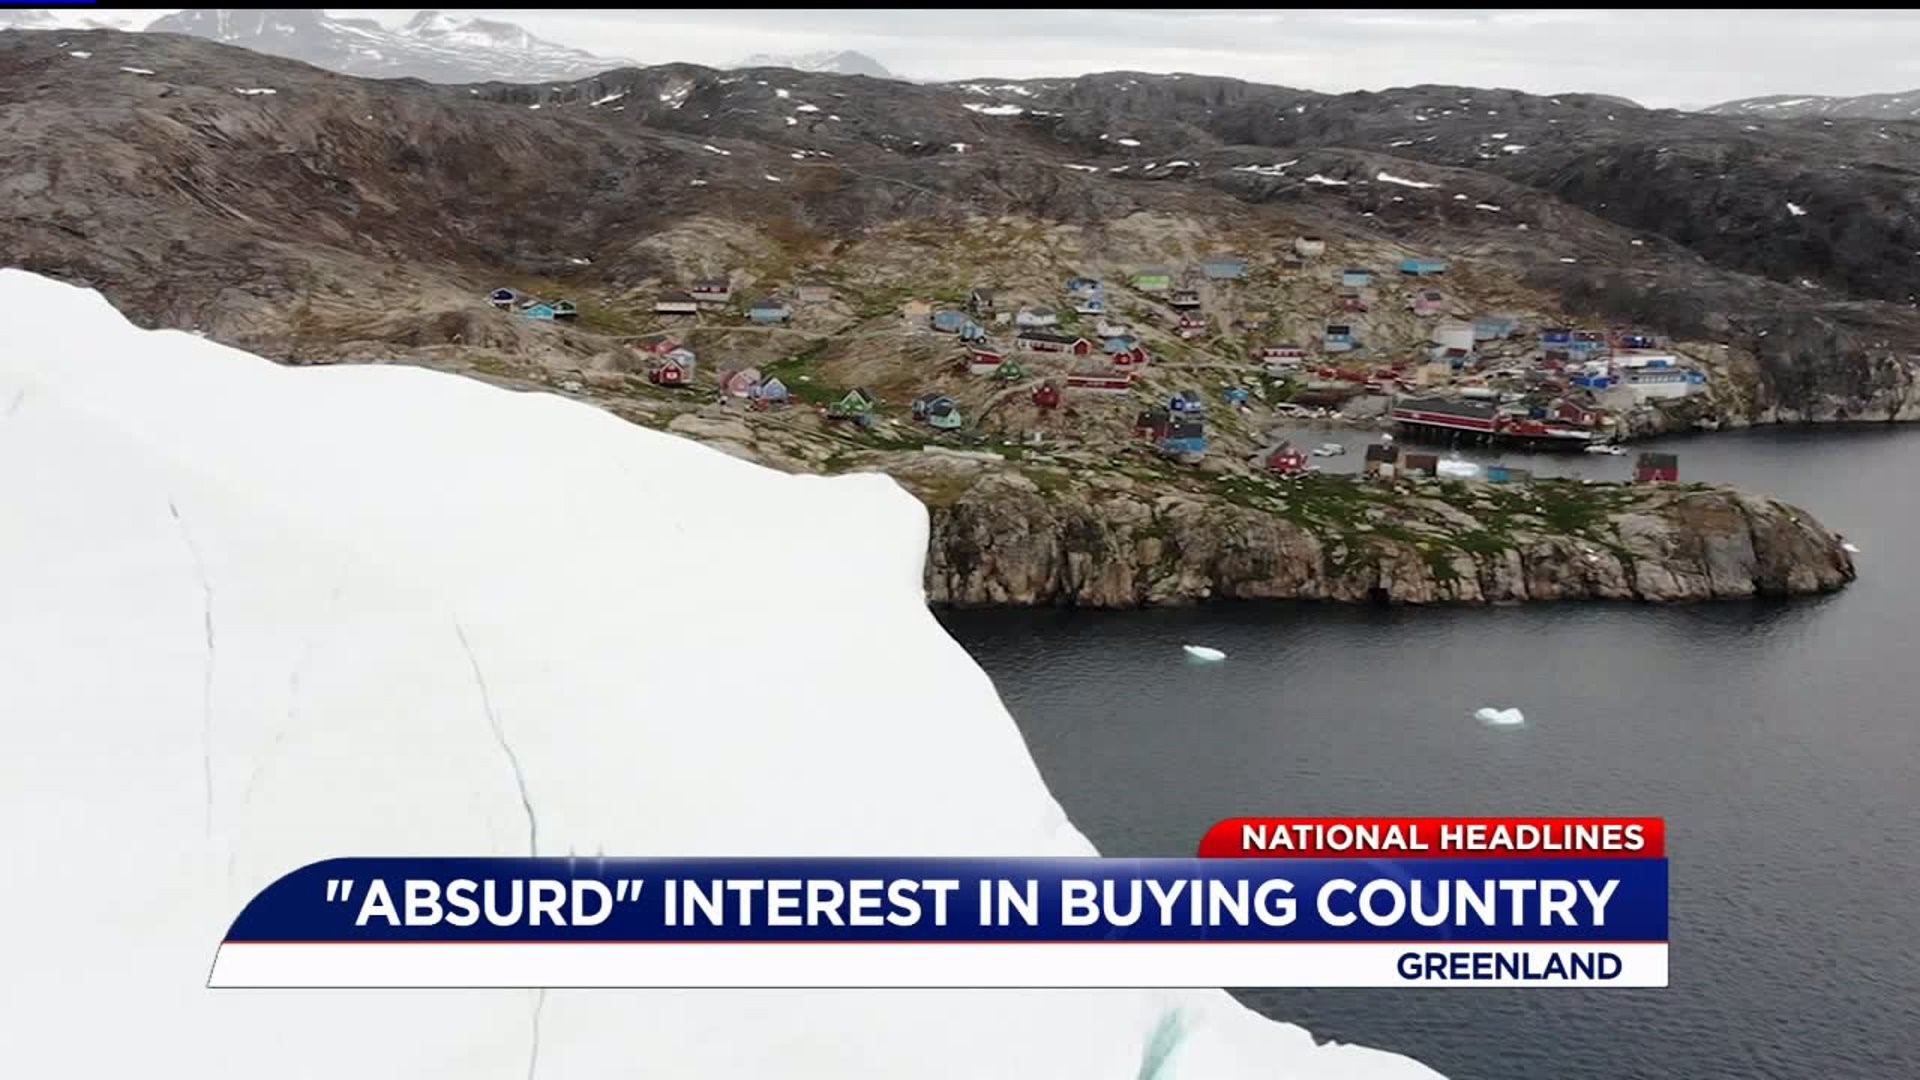 Absurd interest to buy Greenland